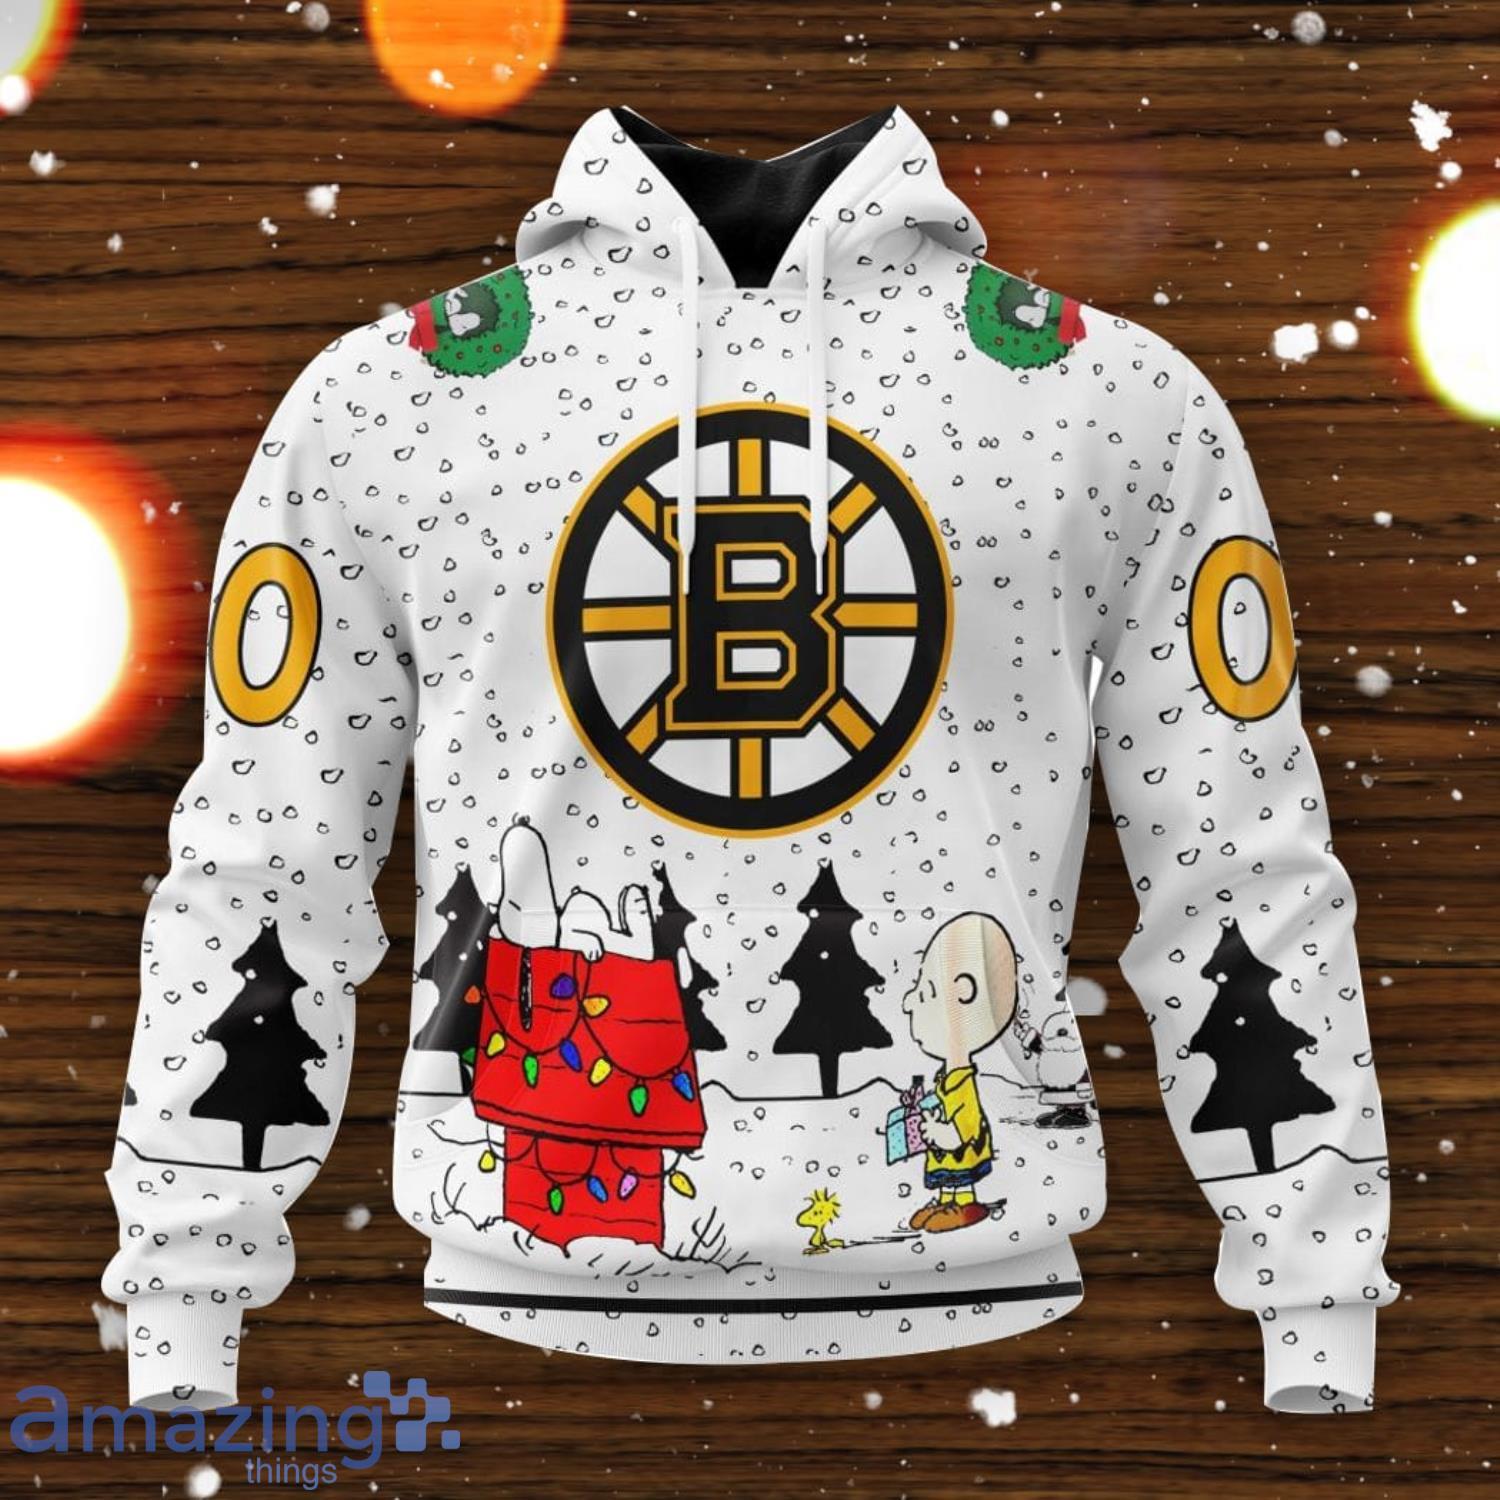 NHL Boston Bruins Boys' Poly Fleece Hooded Sweatshirt - XS